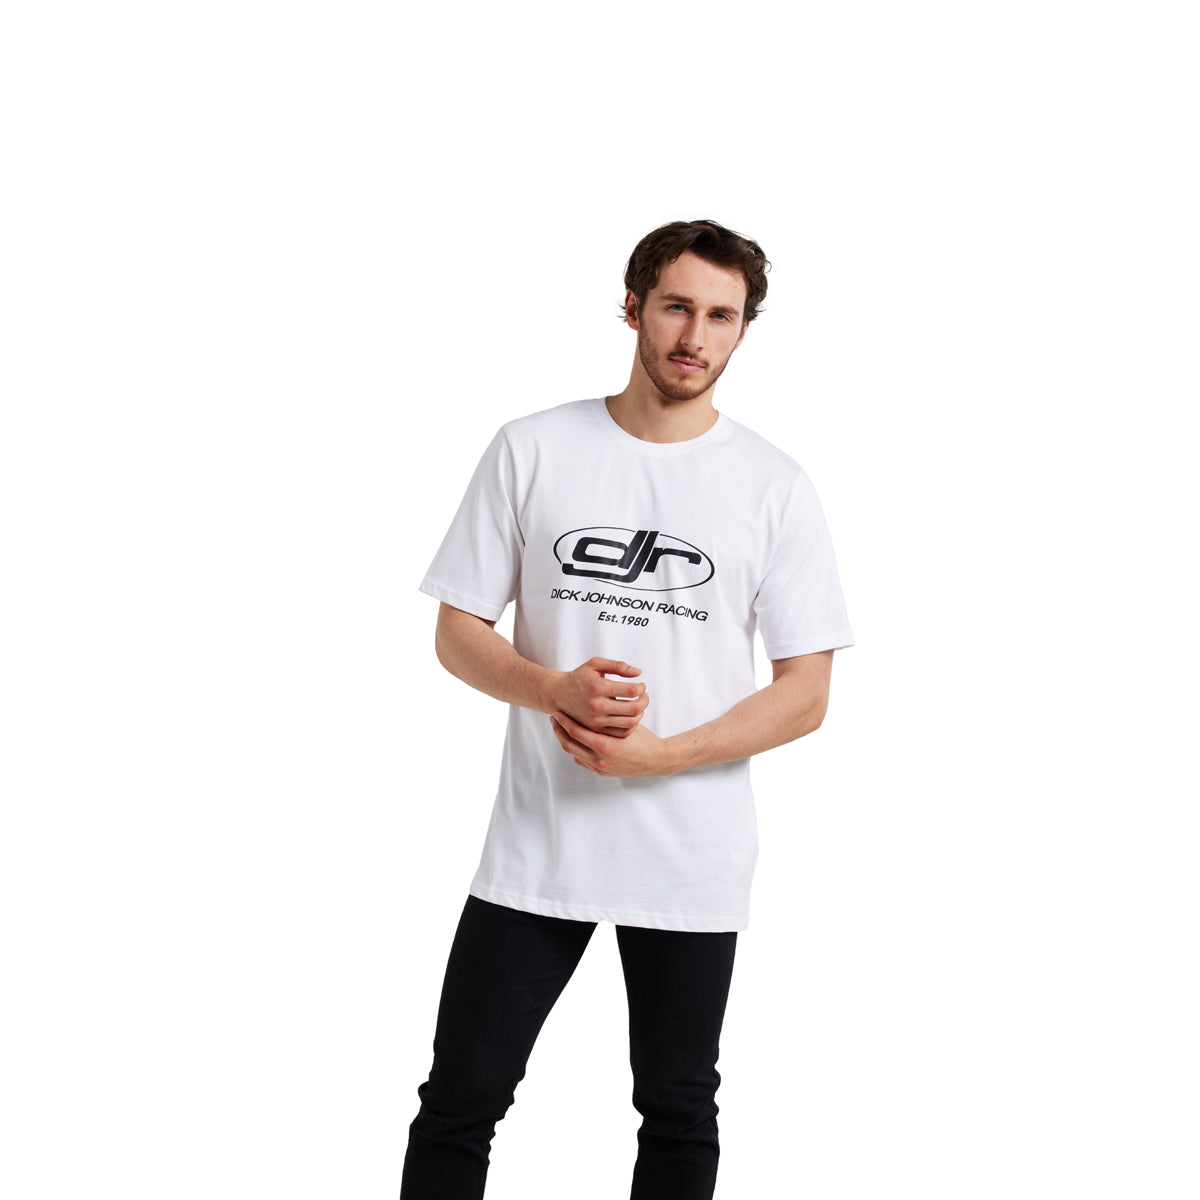 DJR Casual White T-Shirt